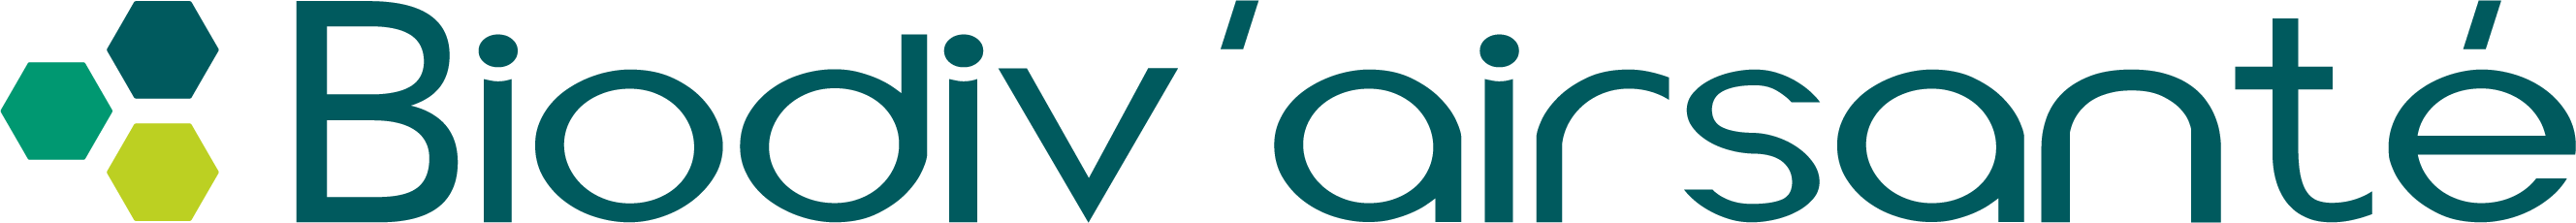 biodiv-airsante-logo